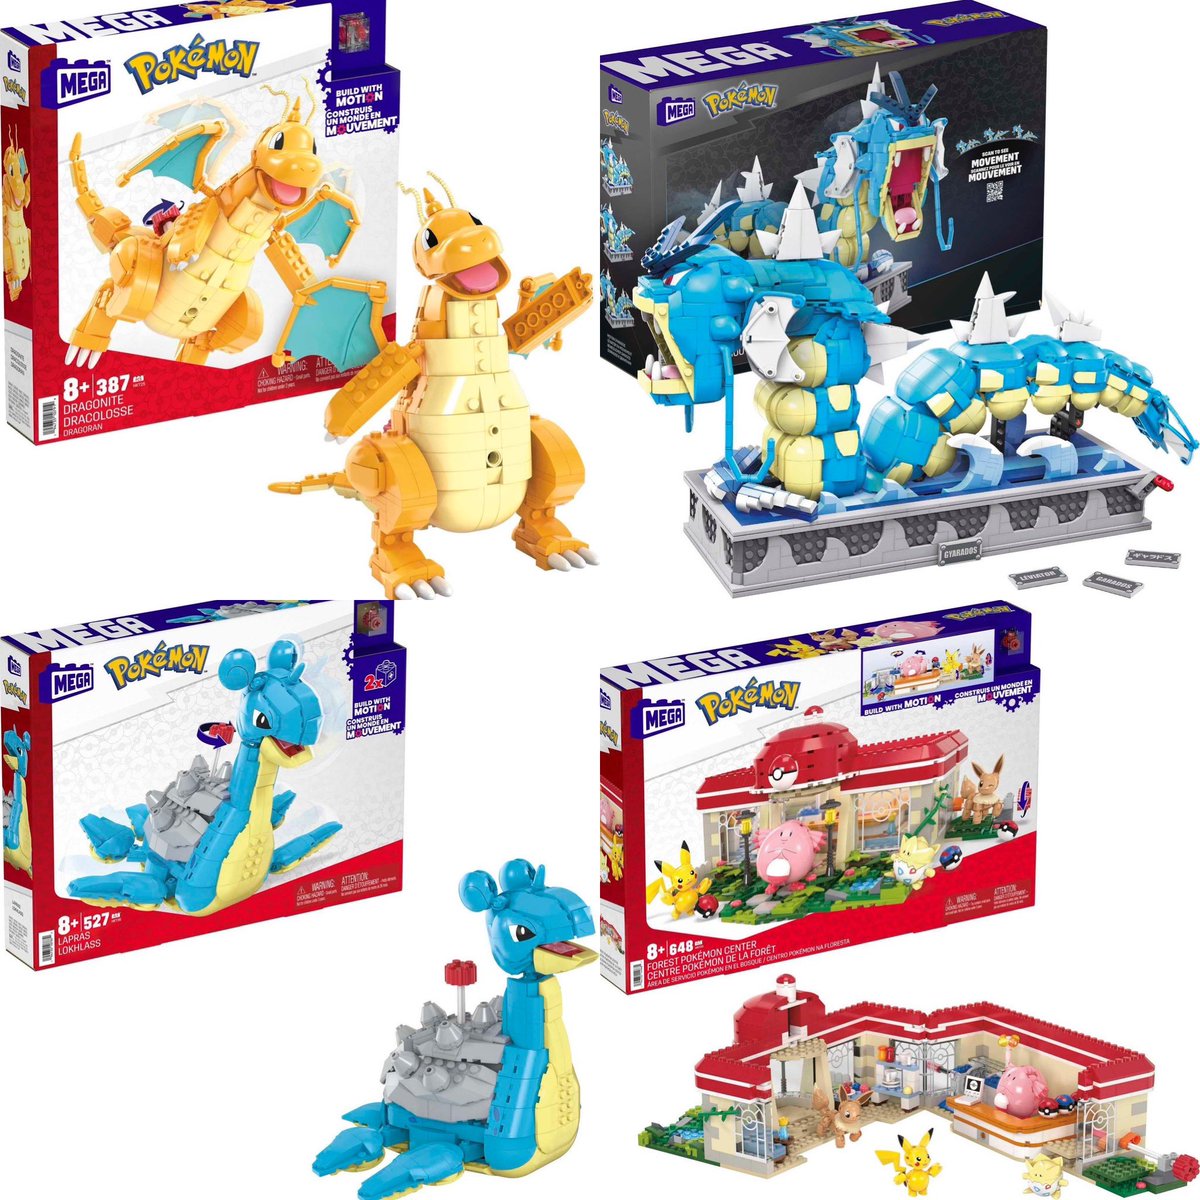 Deal 🚨- These Mega Pokémon sets are on sale at Amazon! #Ad #Pokemon #Collectibles #Mattel . amzn.to/3Jvcs6U